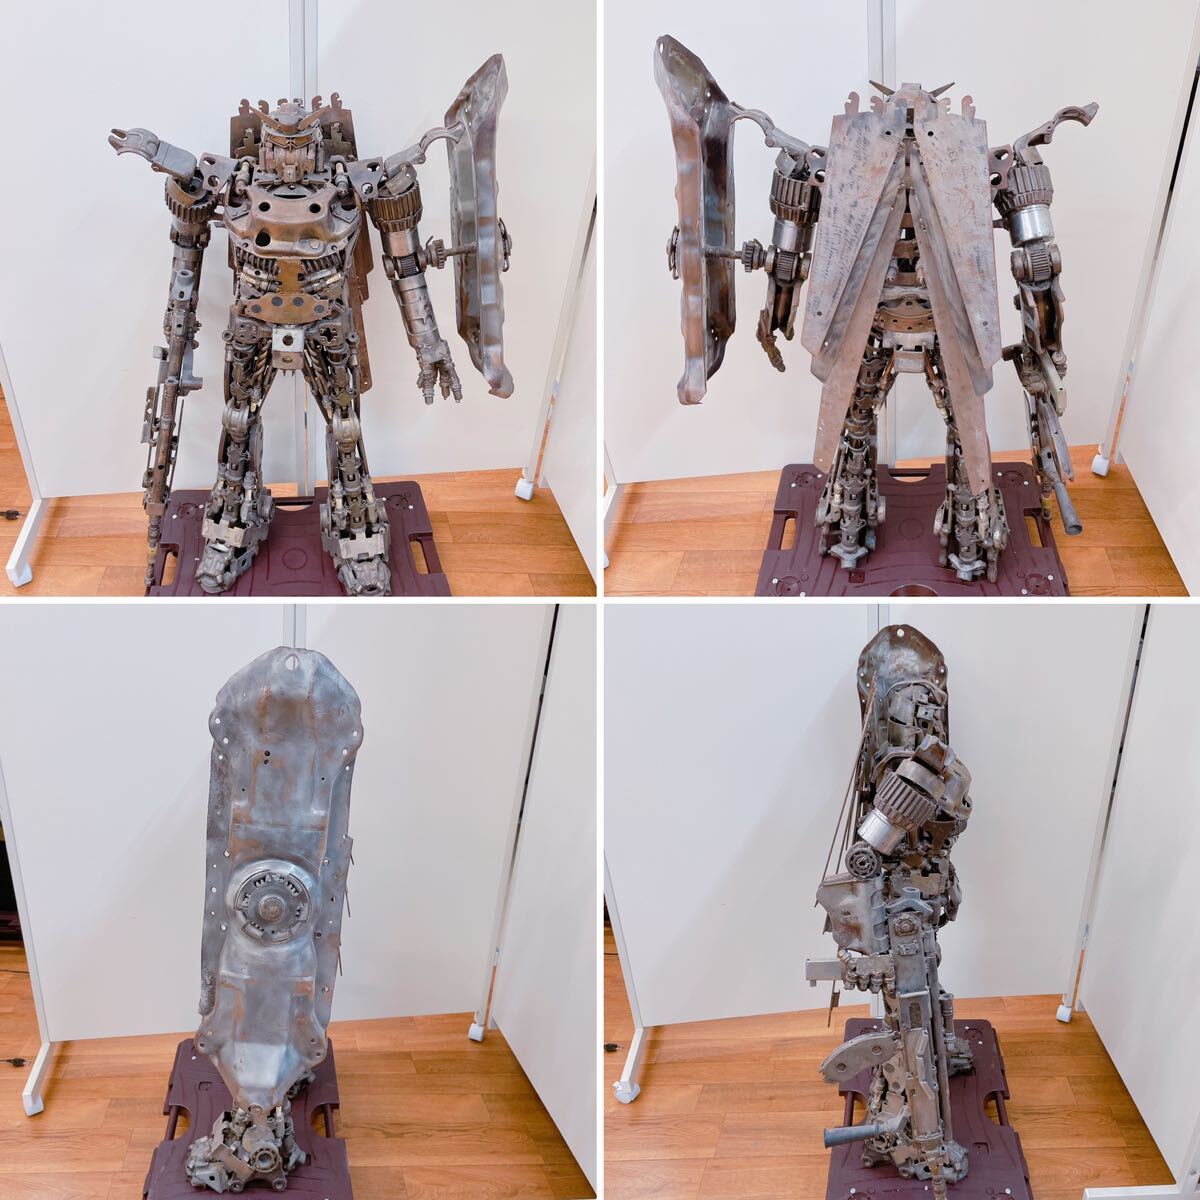 4Ｅ021 ガンダム風ロボット 廃材アート メタルアート バイクパーツ 鉄材 の画像2